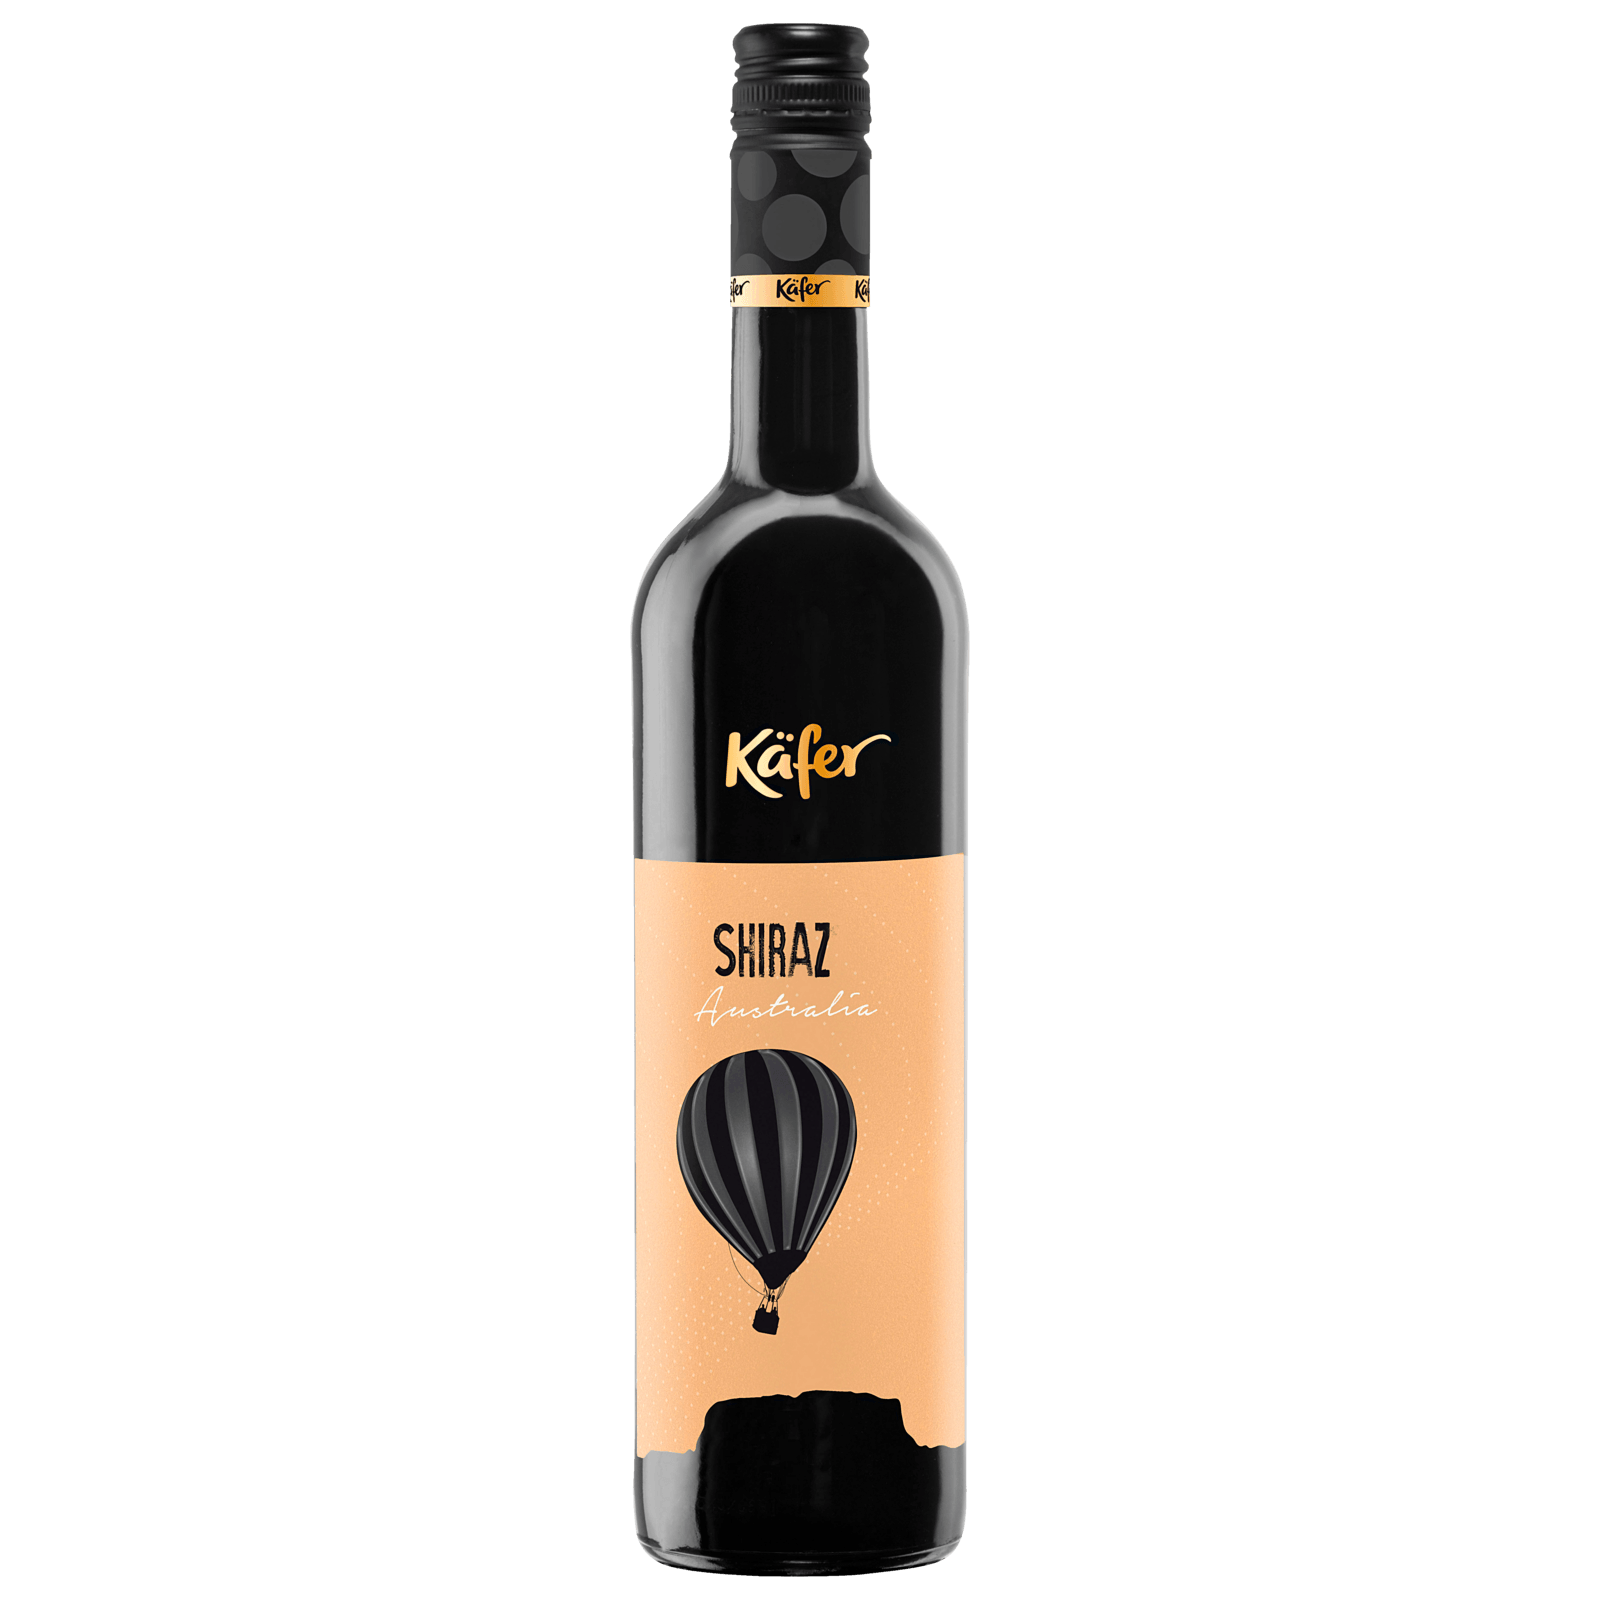 Käfer Shiraz Rotwein trocken 0,75l bei REWE online bestellen!